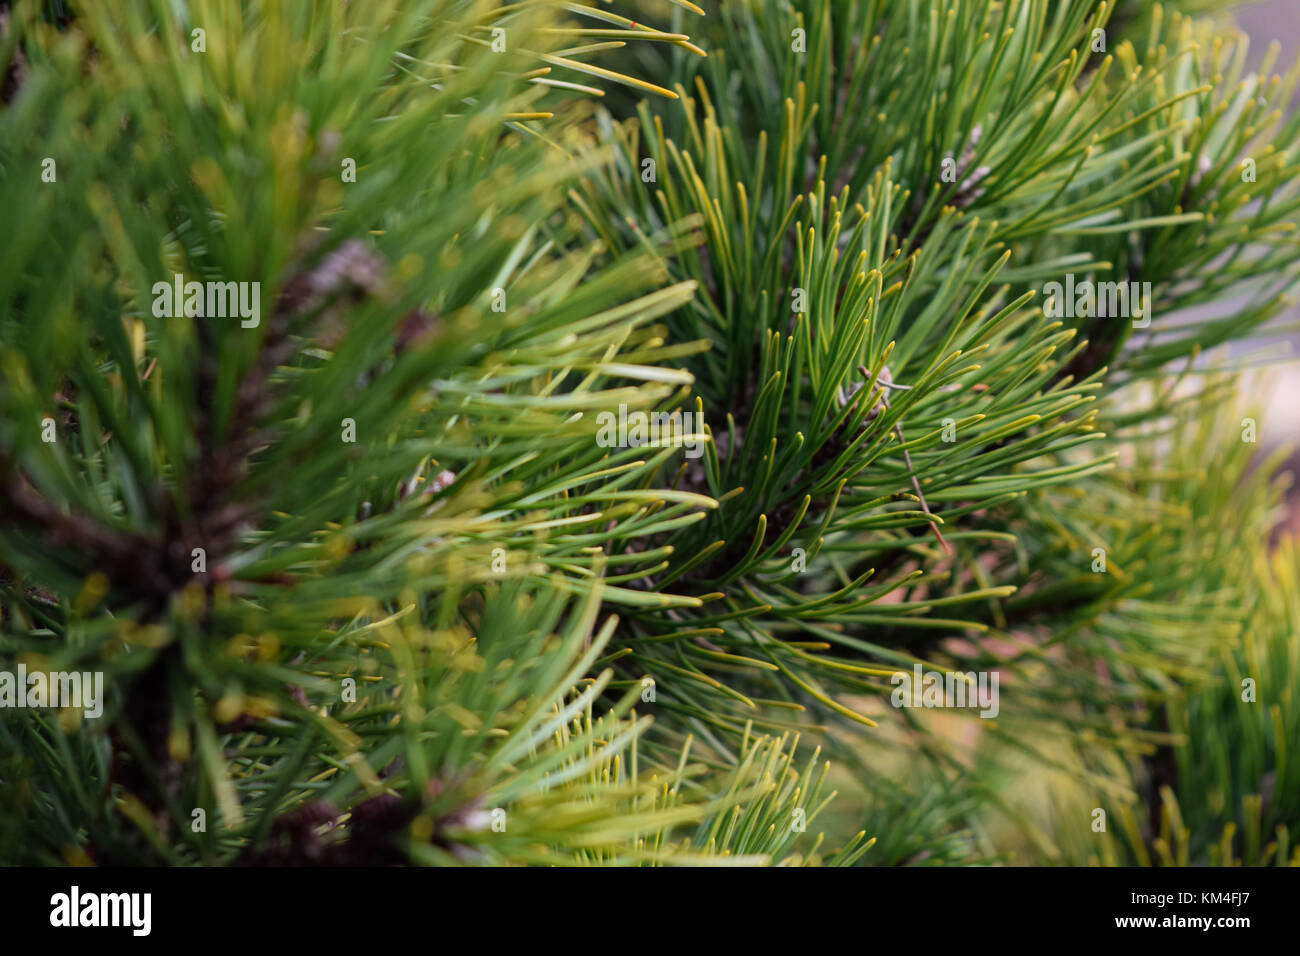 Pine needle tree close up. Stock Photo